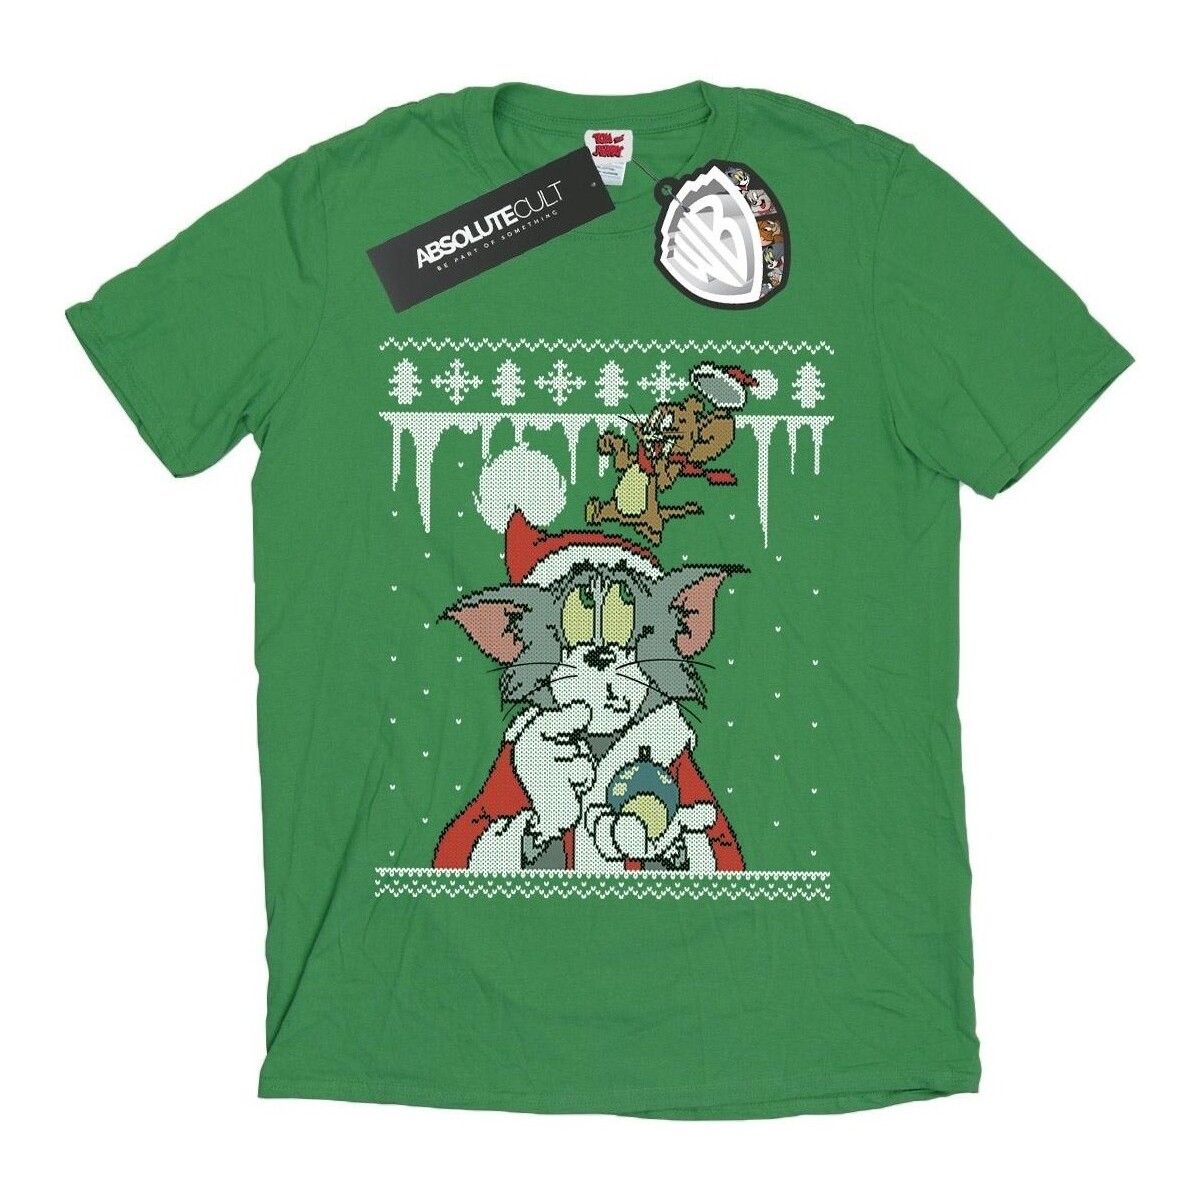 textil Hombre Camisetas manga larga Dessins Animés Christmas Fair Isle Verde